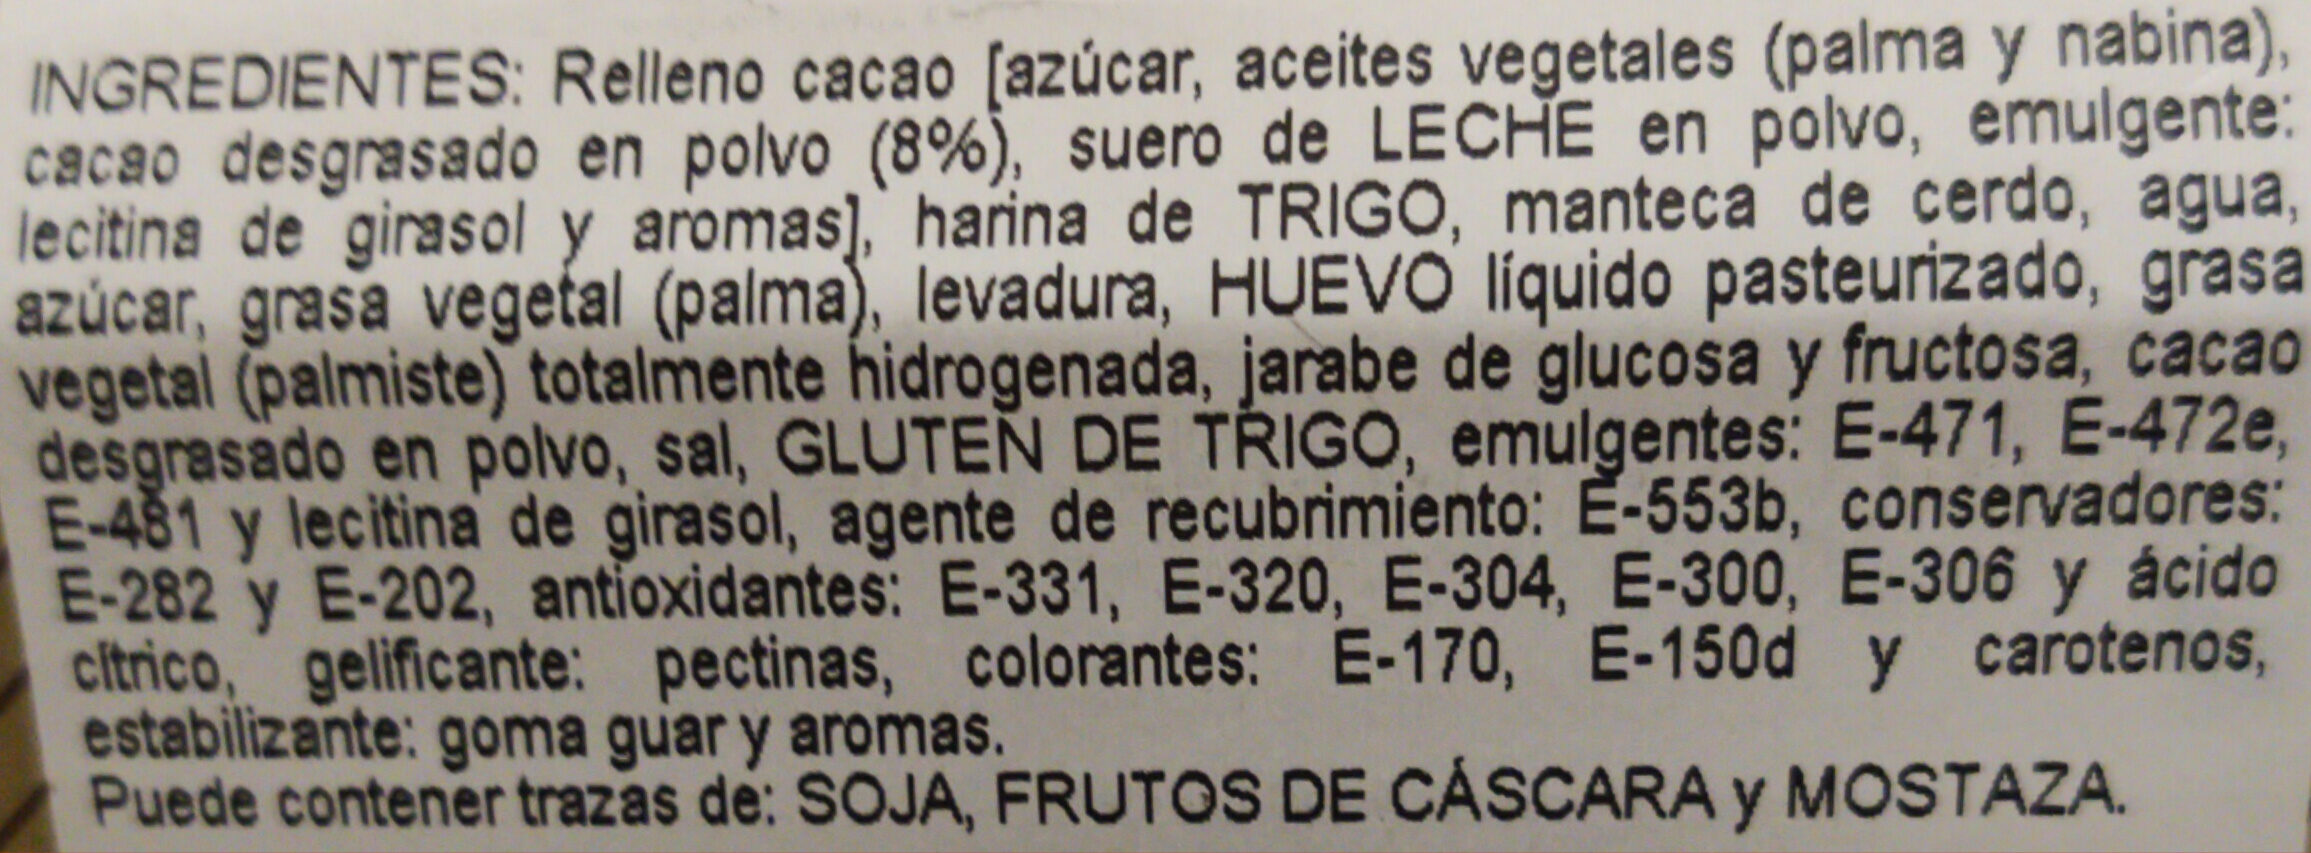 Croissant Cacao Viruta - Ingredients - es